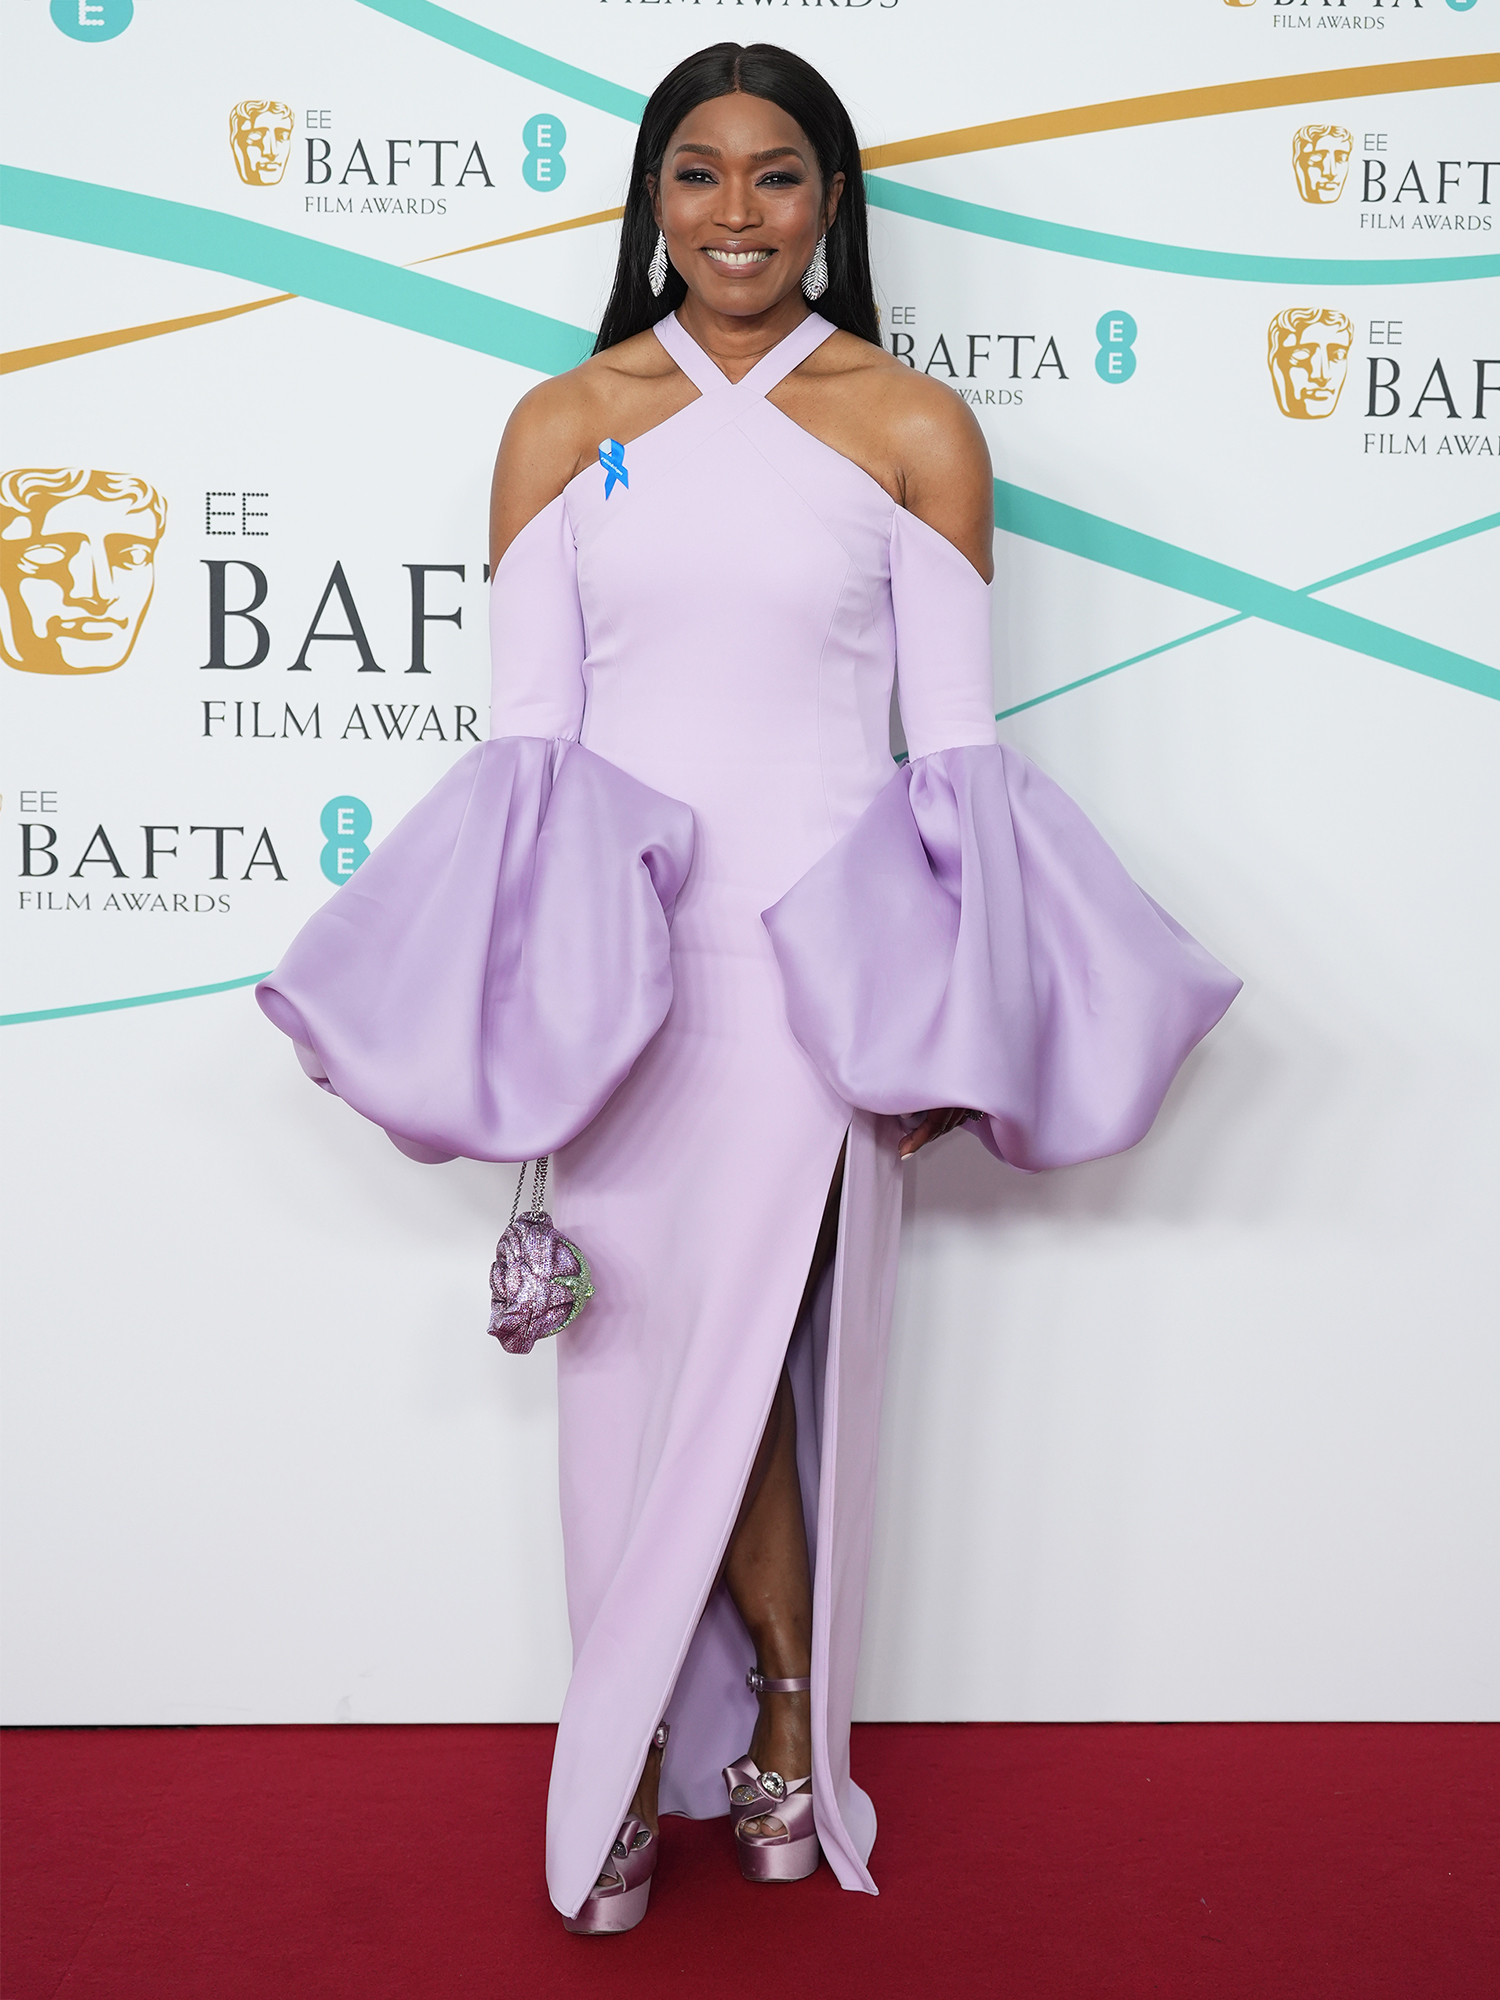 BAFTAs Red Carpet: Best Fashion Photos at 2022 Awards